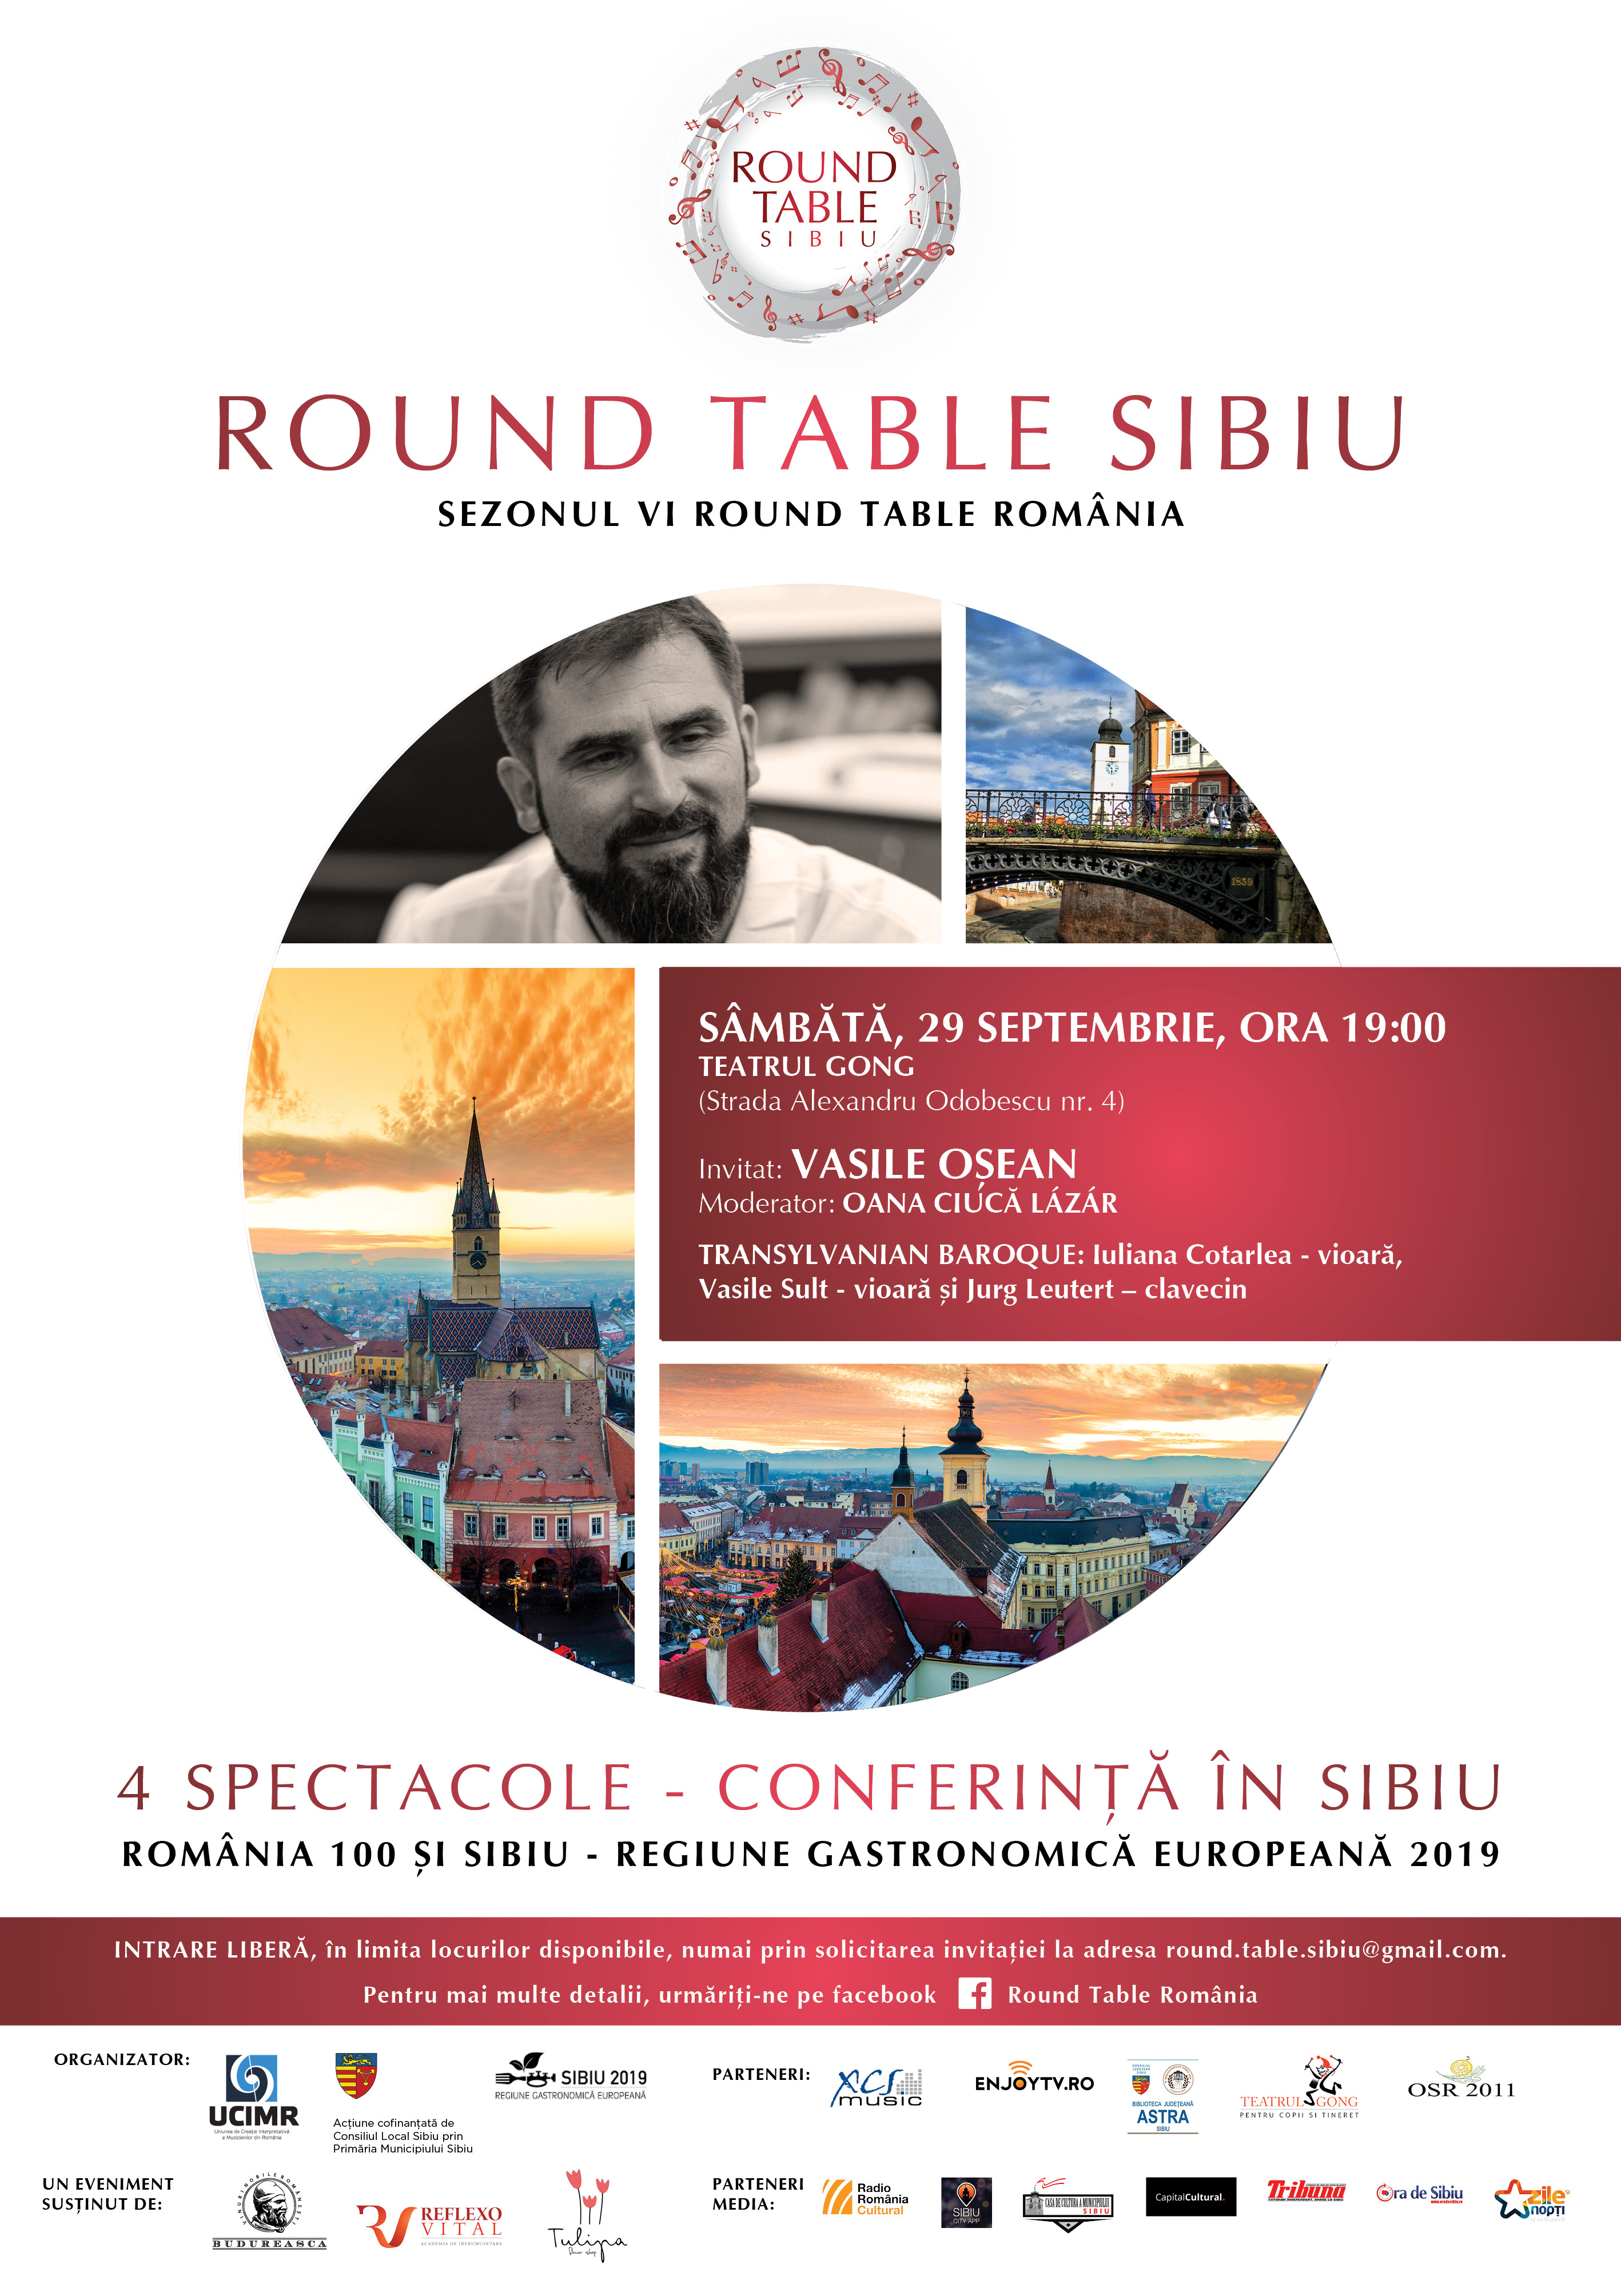 Vasile Osean invitat la Round Table Sibiu